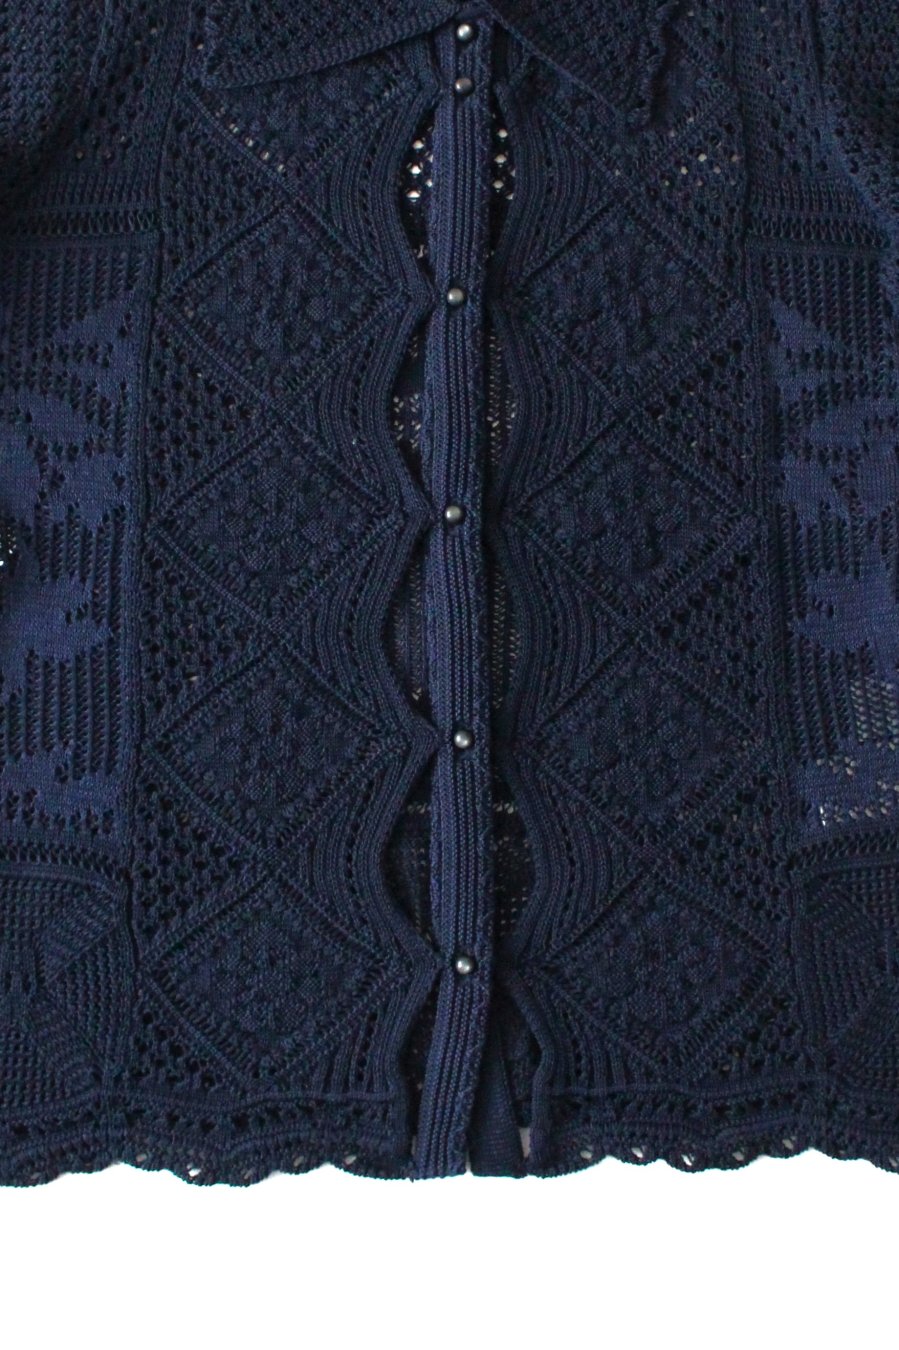 Mame Kurogouchi（マメ クロゴウチ）Cotton Lace Knitted Cardigan 